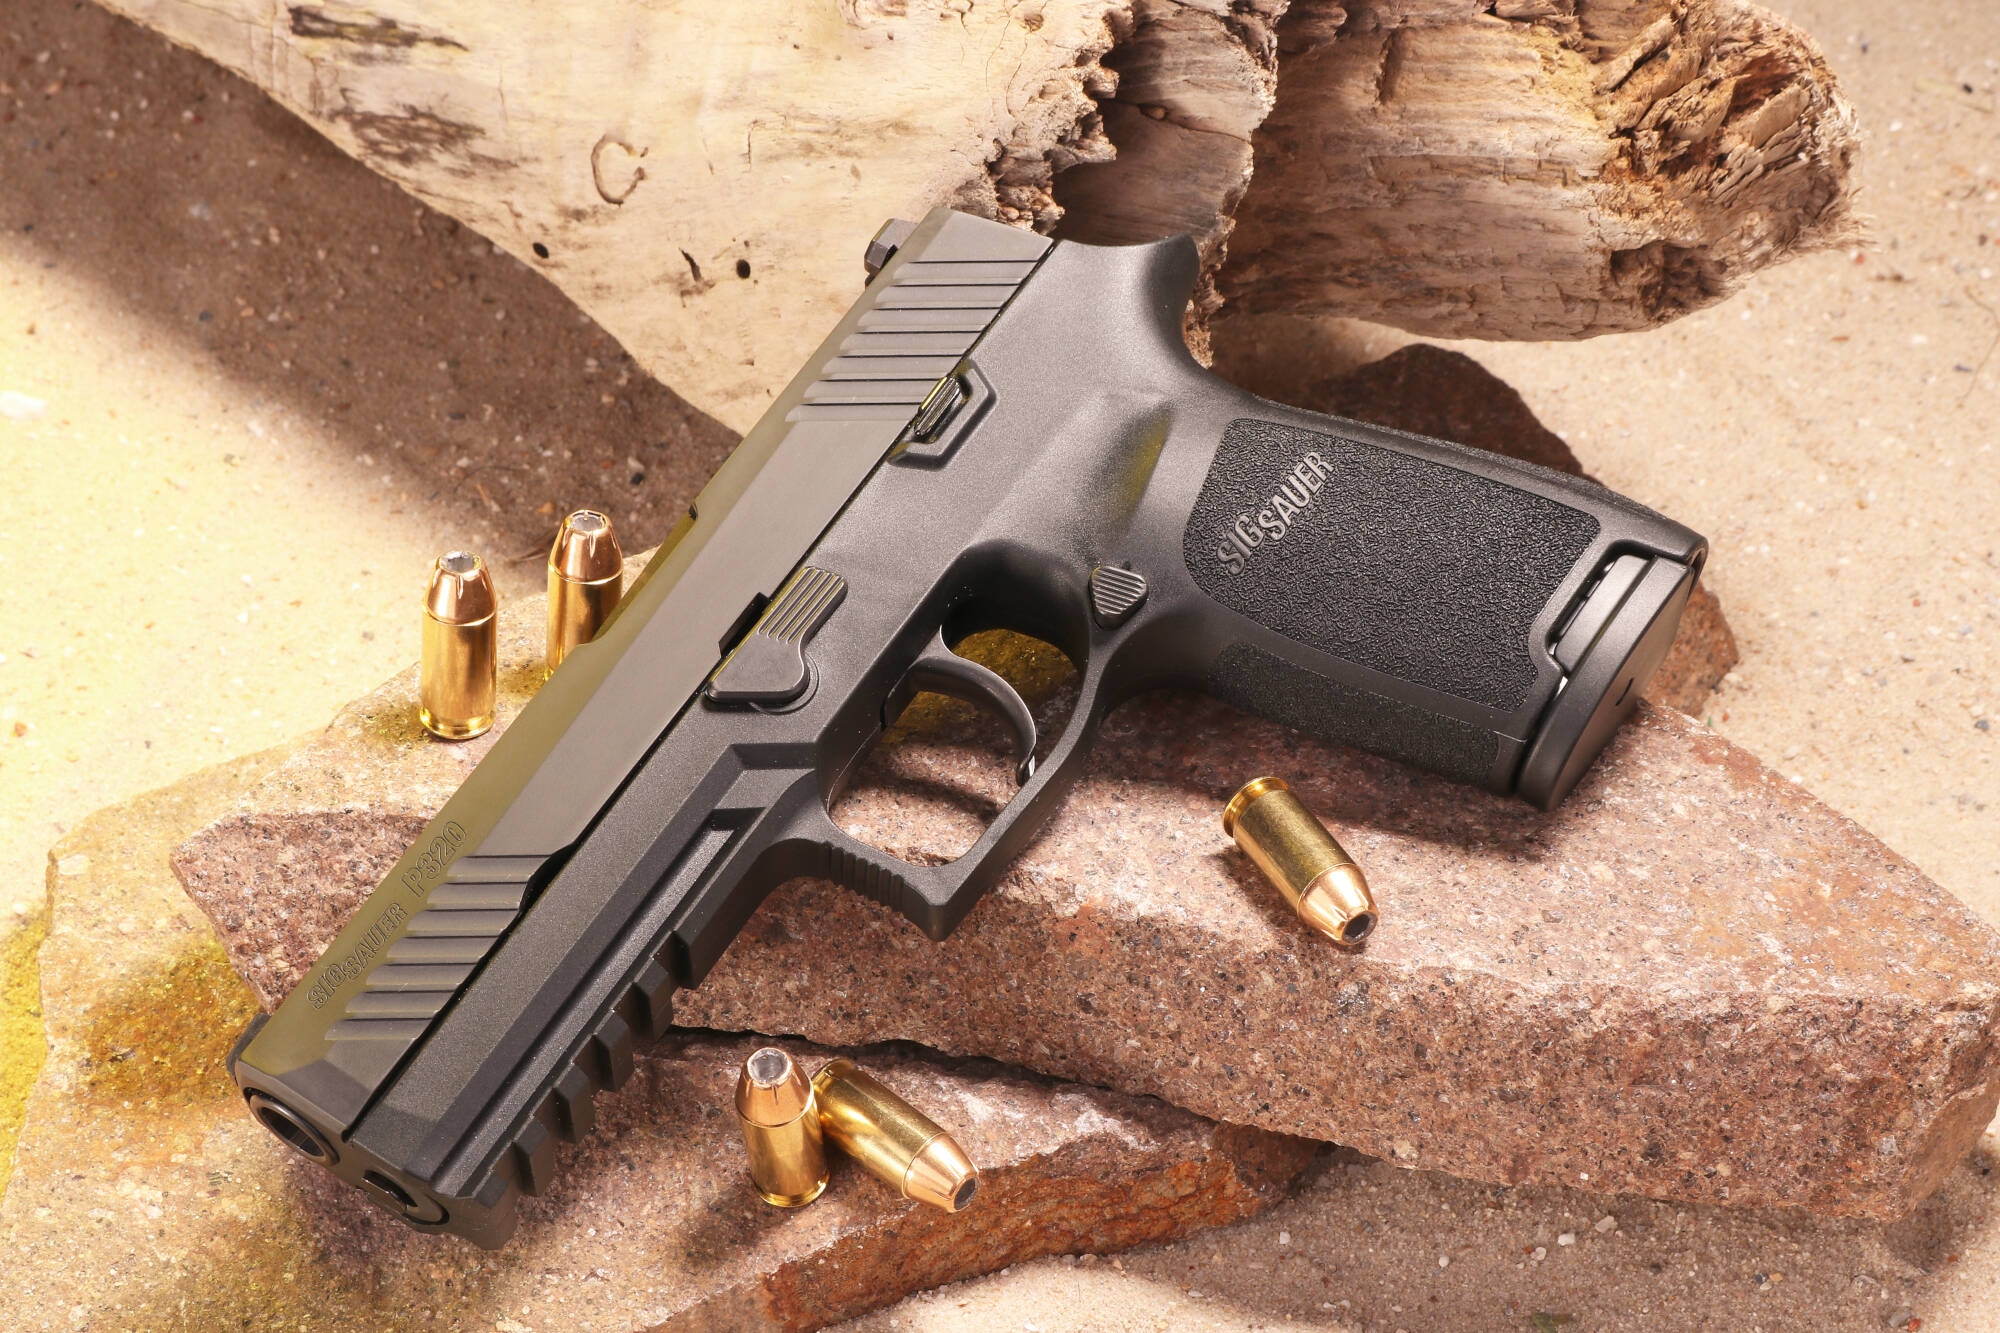 Test: SIG Sauer P320 in .45 ACP - The SIG Sauer service pistol in